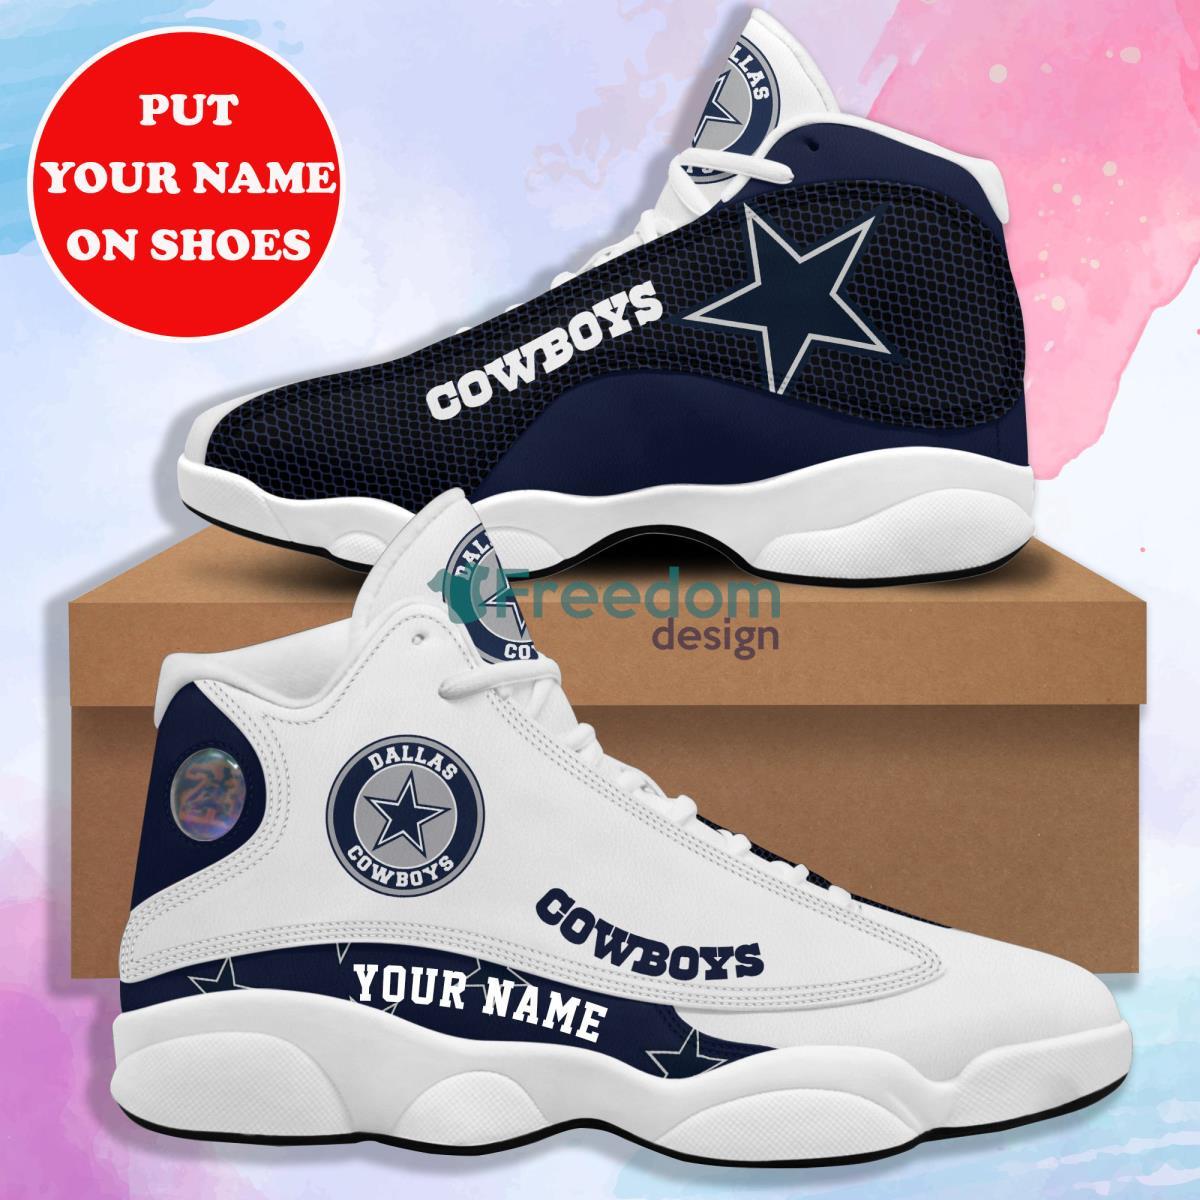 Cool Dallas Cowboys Custo Name Air Jordan 13 Shoes For Fans - Freedomdesign